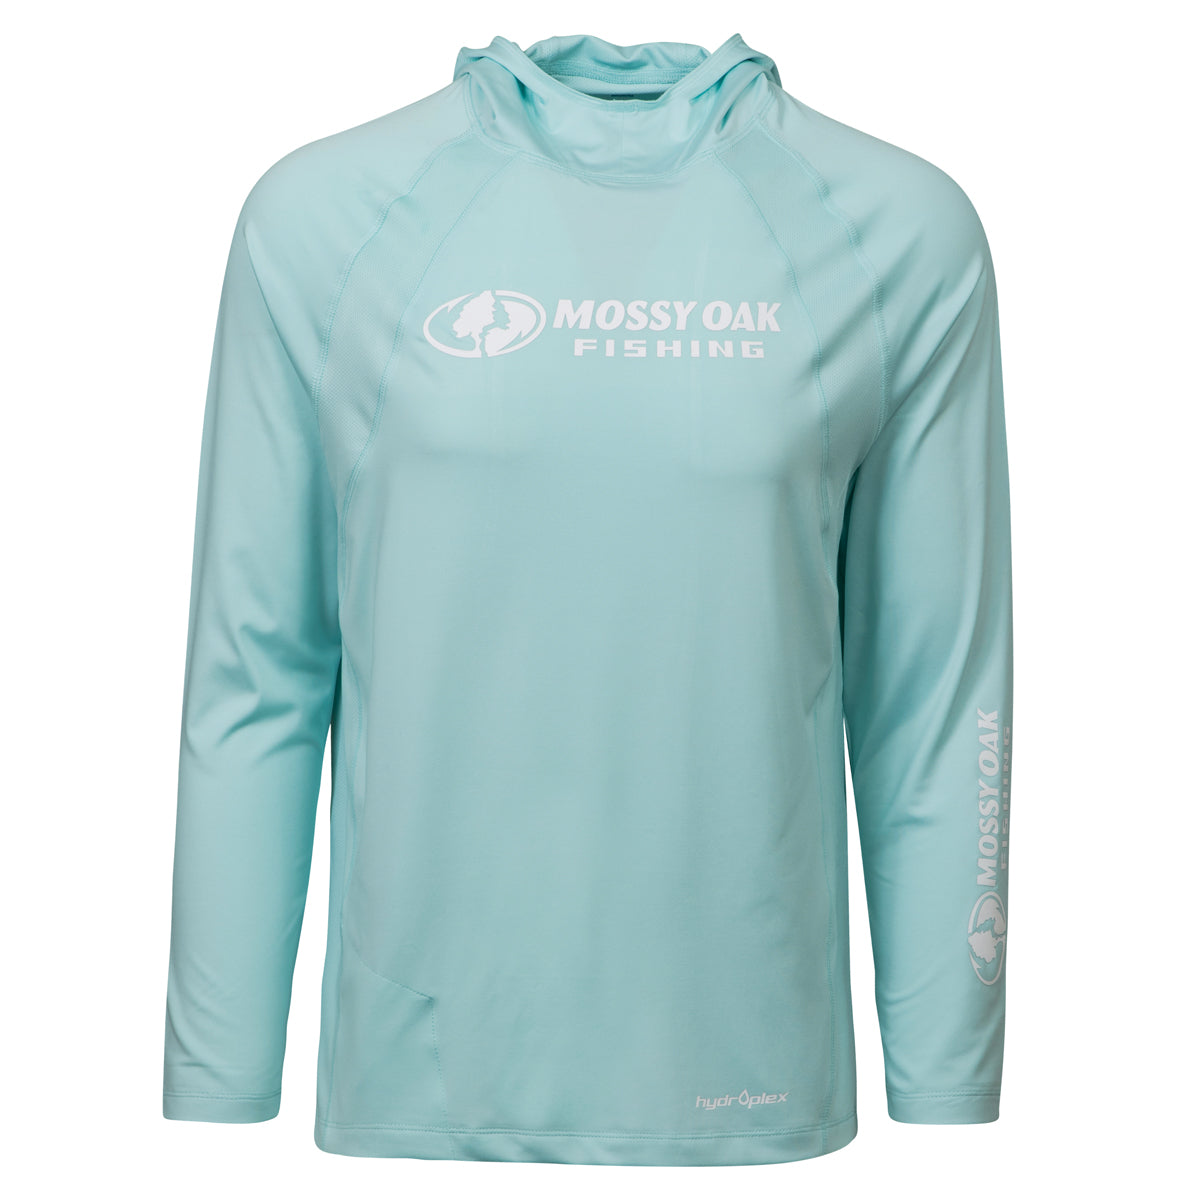  Mossy Oak Elements Long Sleeve Moisture Wicking Fishing Shirt,  Bonefish/Cool Grey, Medium : Sports & Outdoors